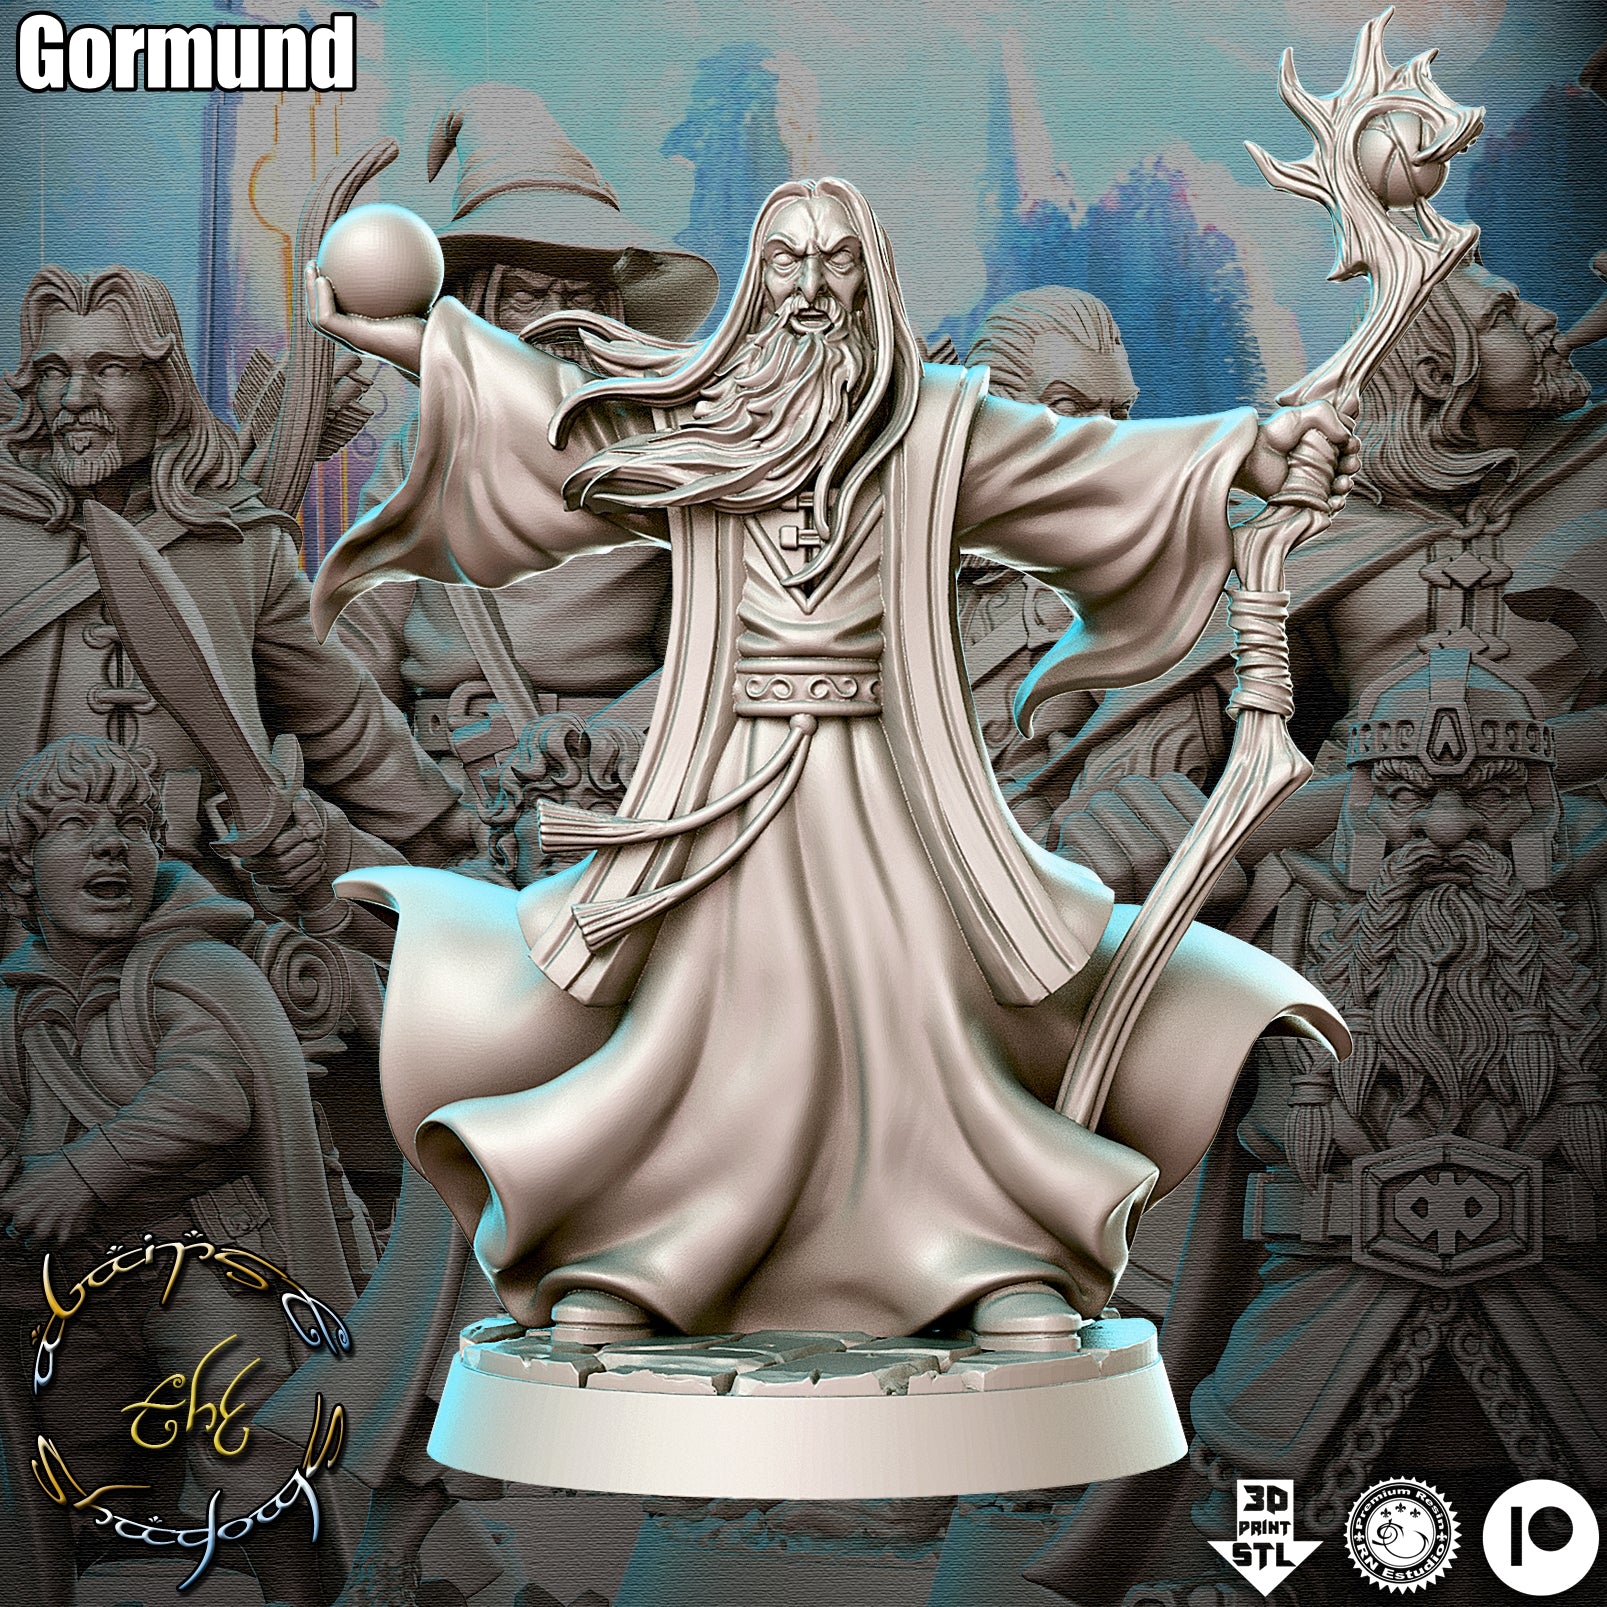 Gormund - Against the Shadows - Green Wildling Miniatures